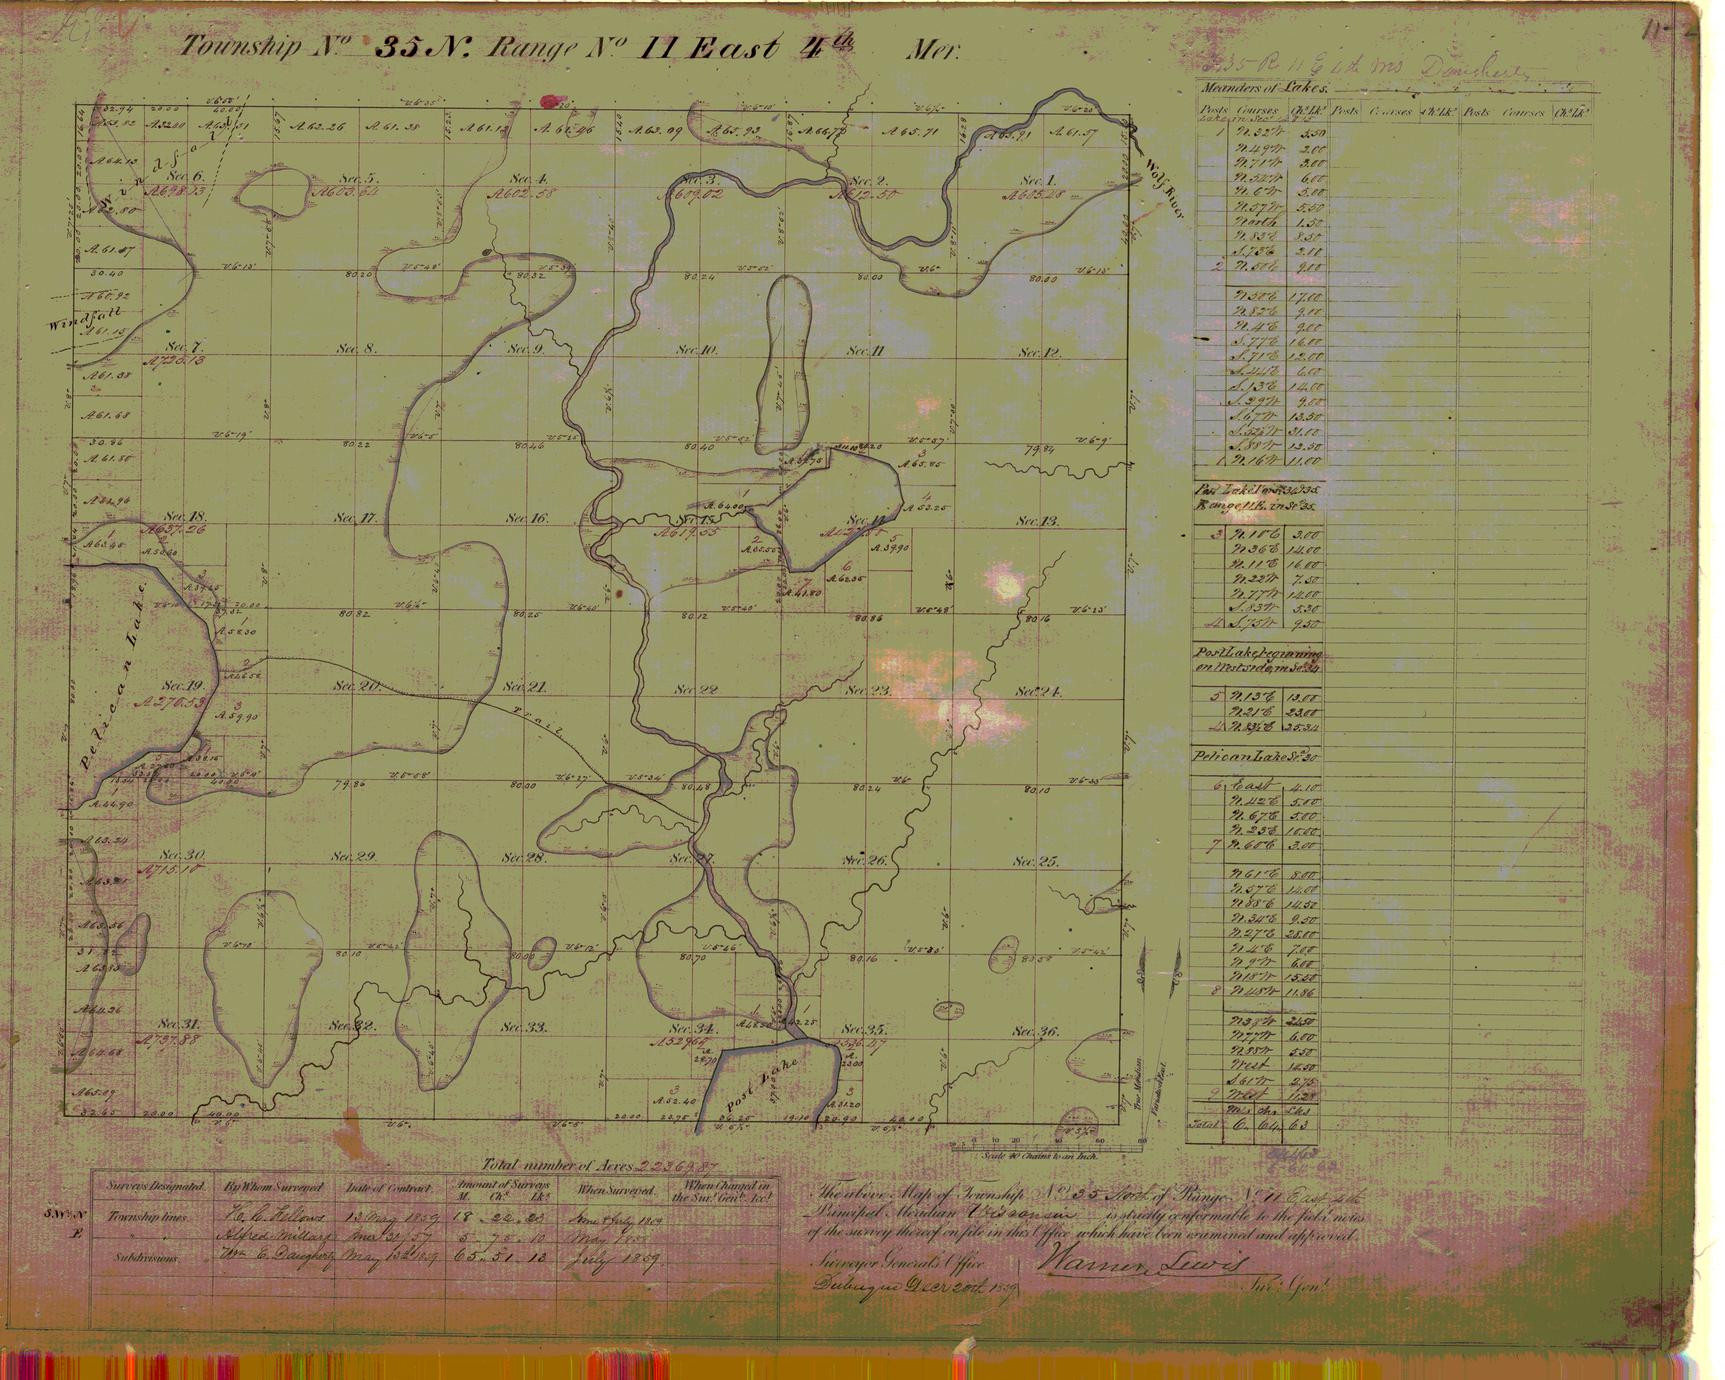 [Public Land Survey System map: Wisconsin Township 35 North, Range 11 East]